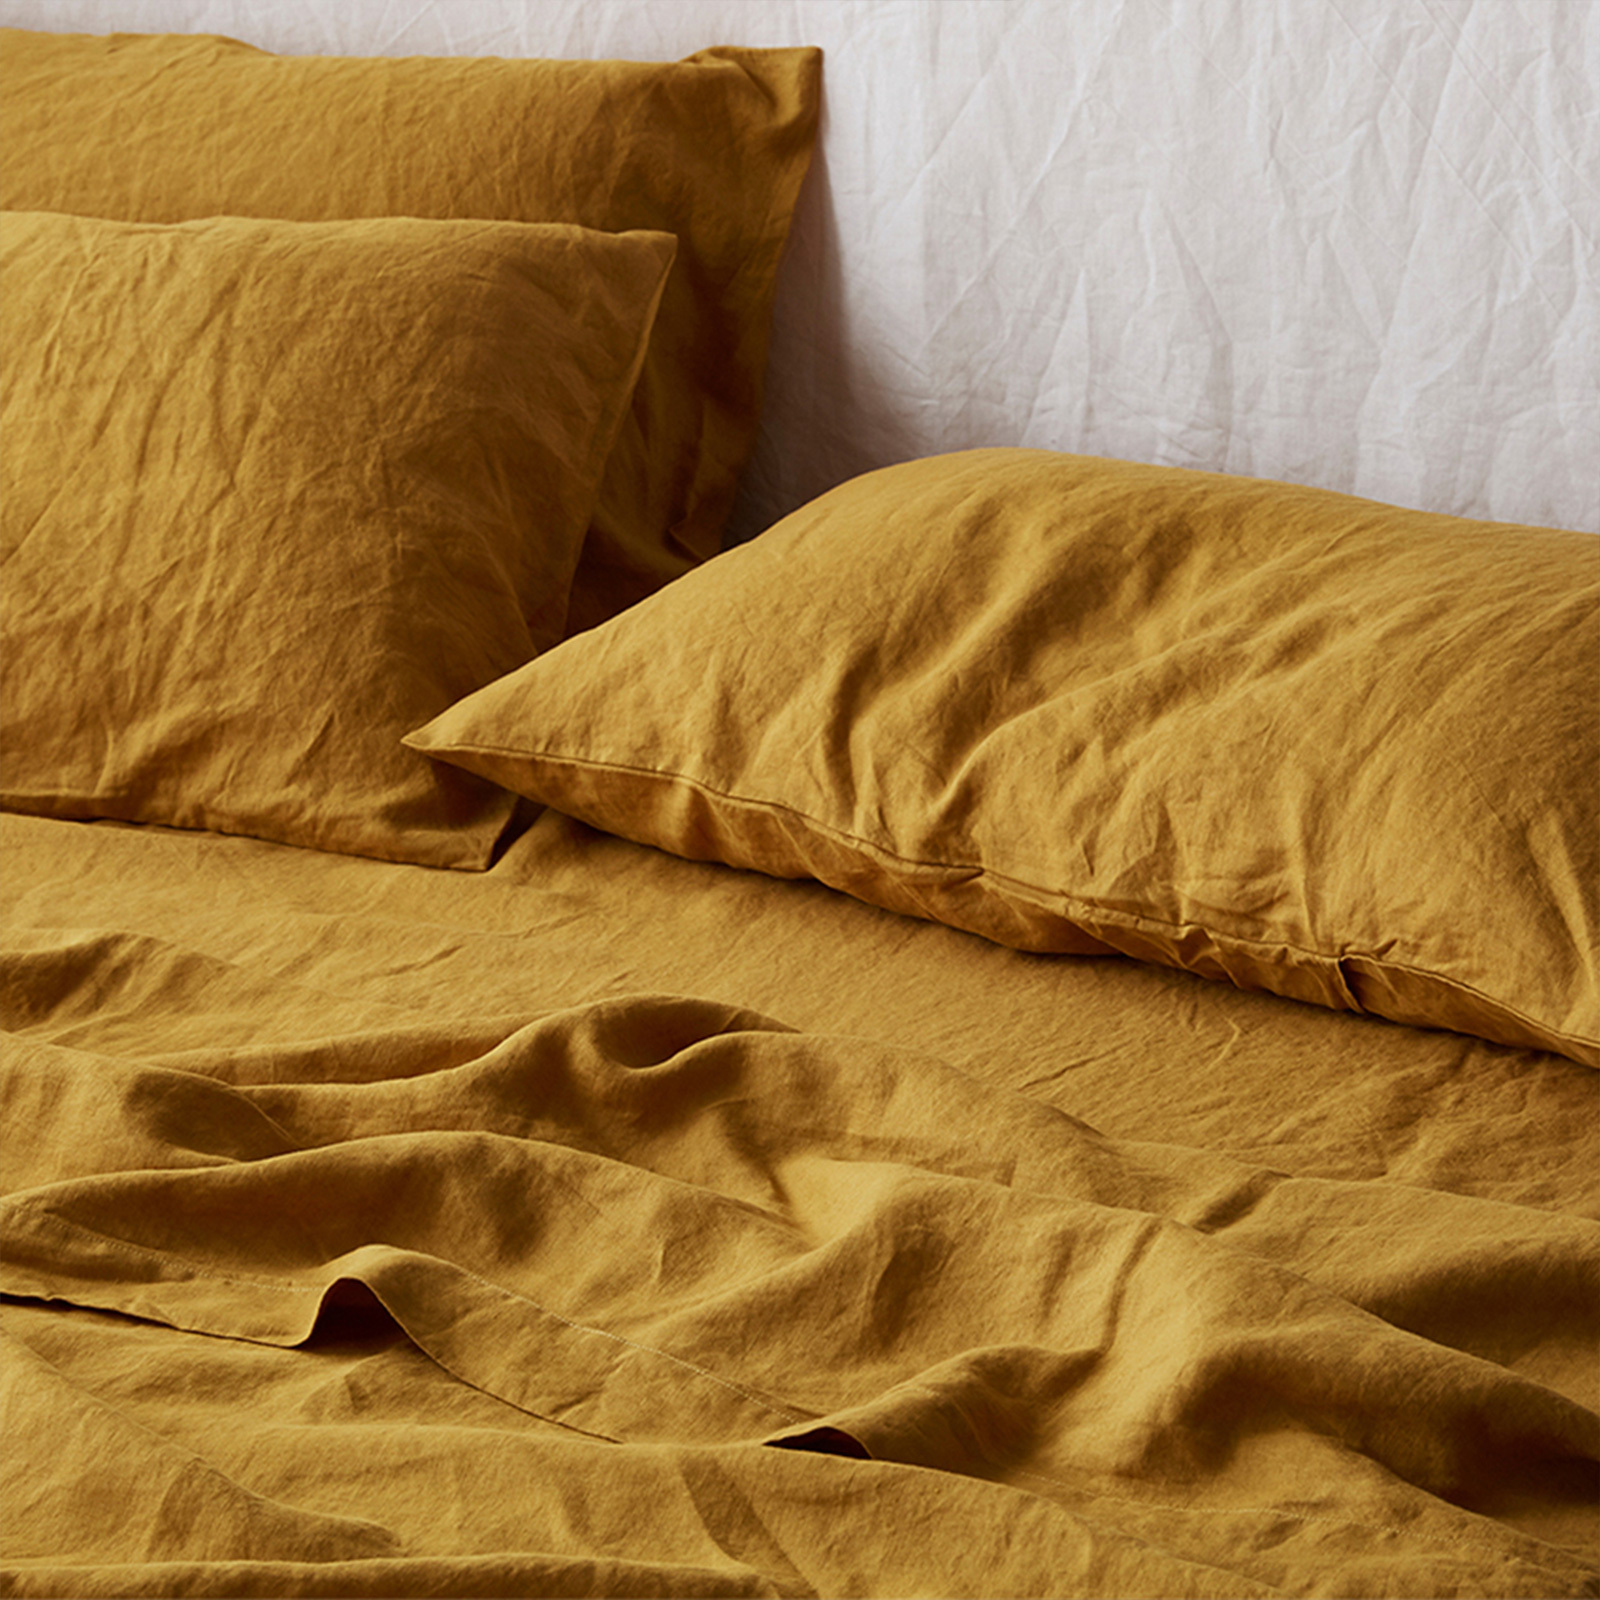 French linen flat sheet in Mustard